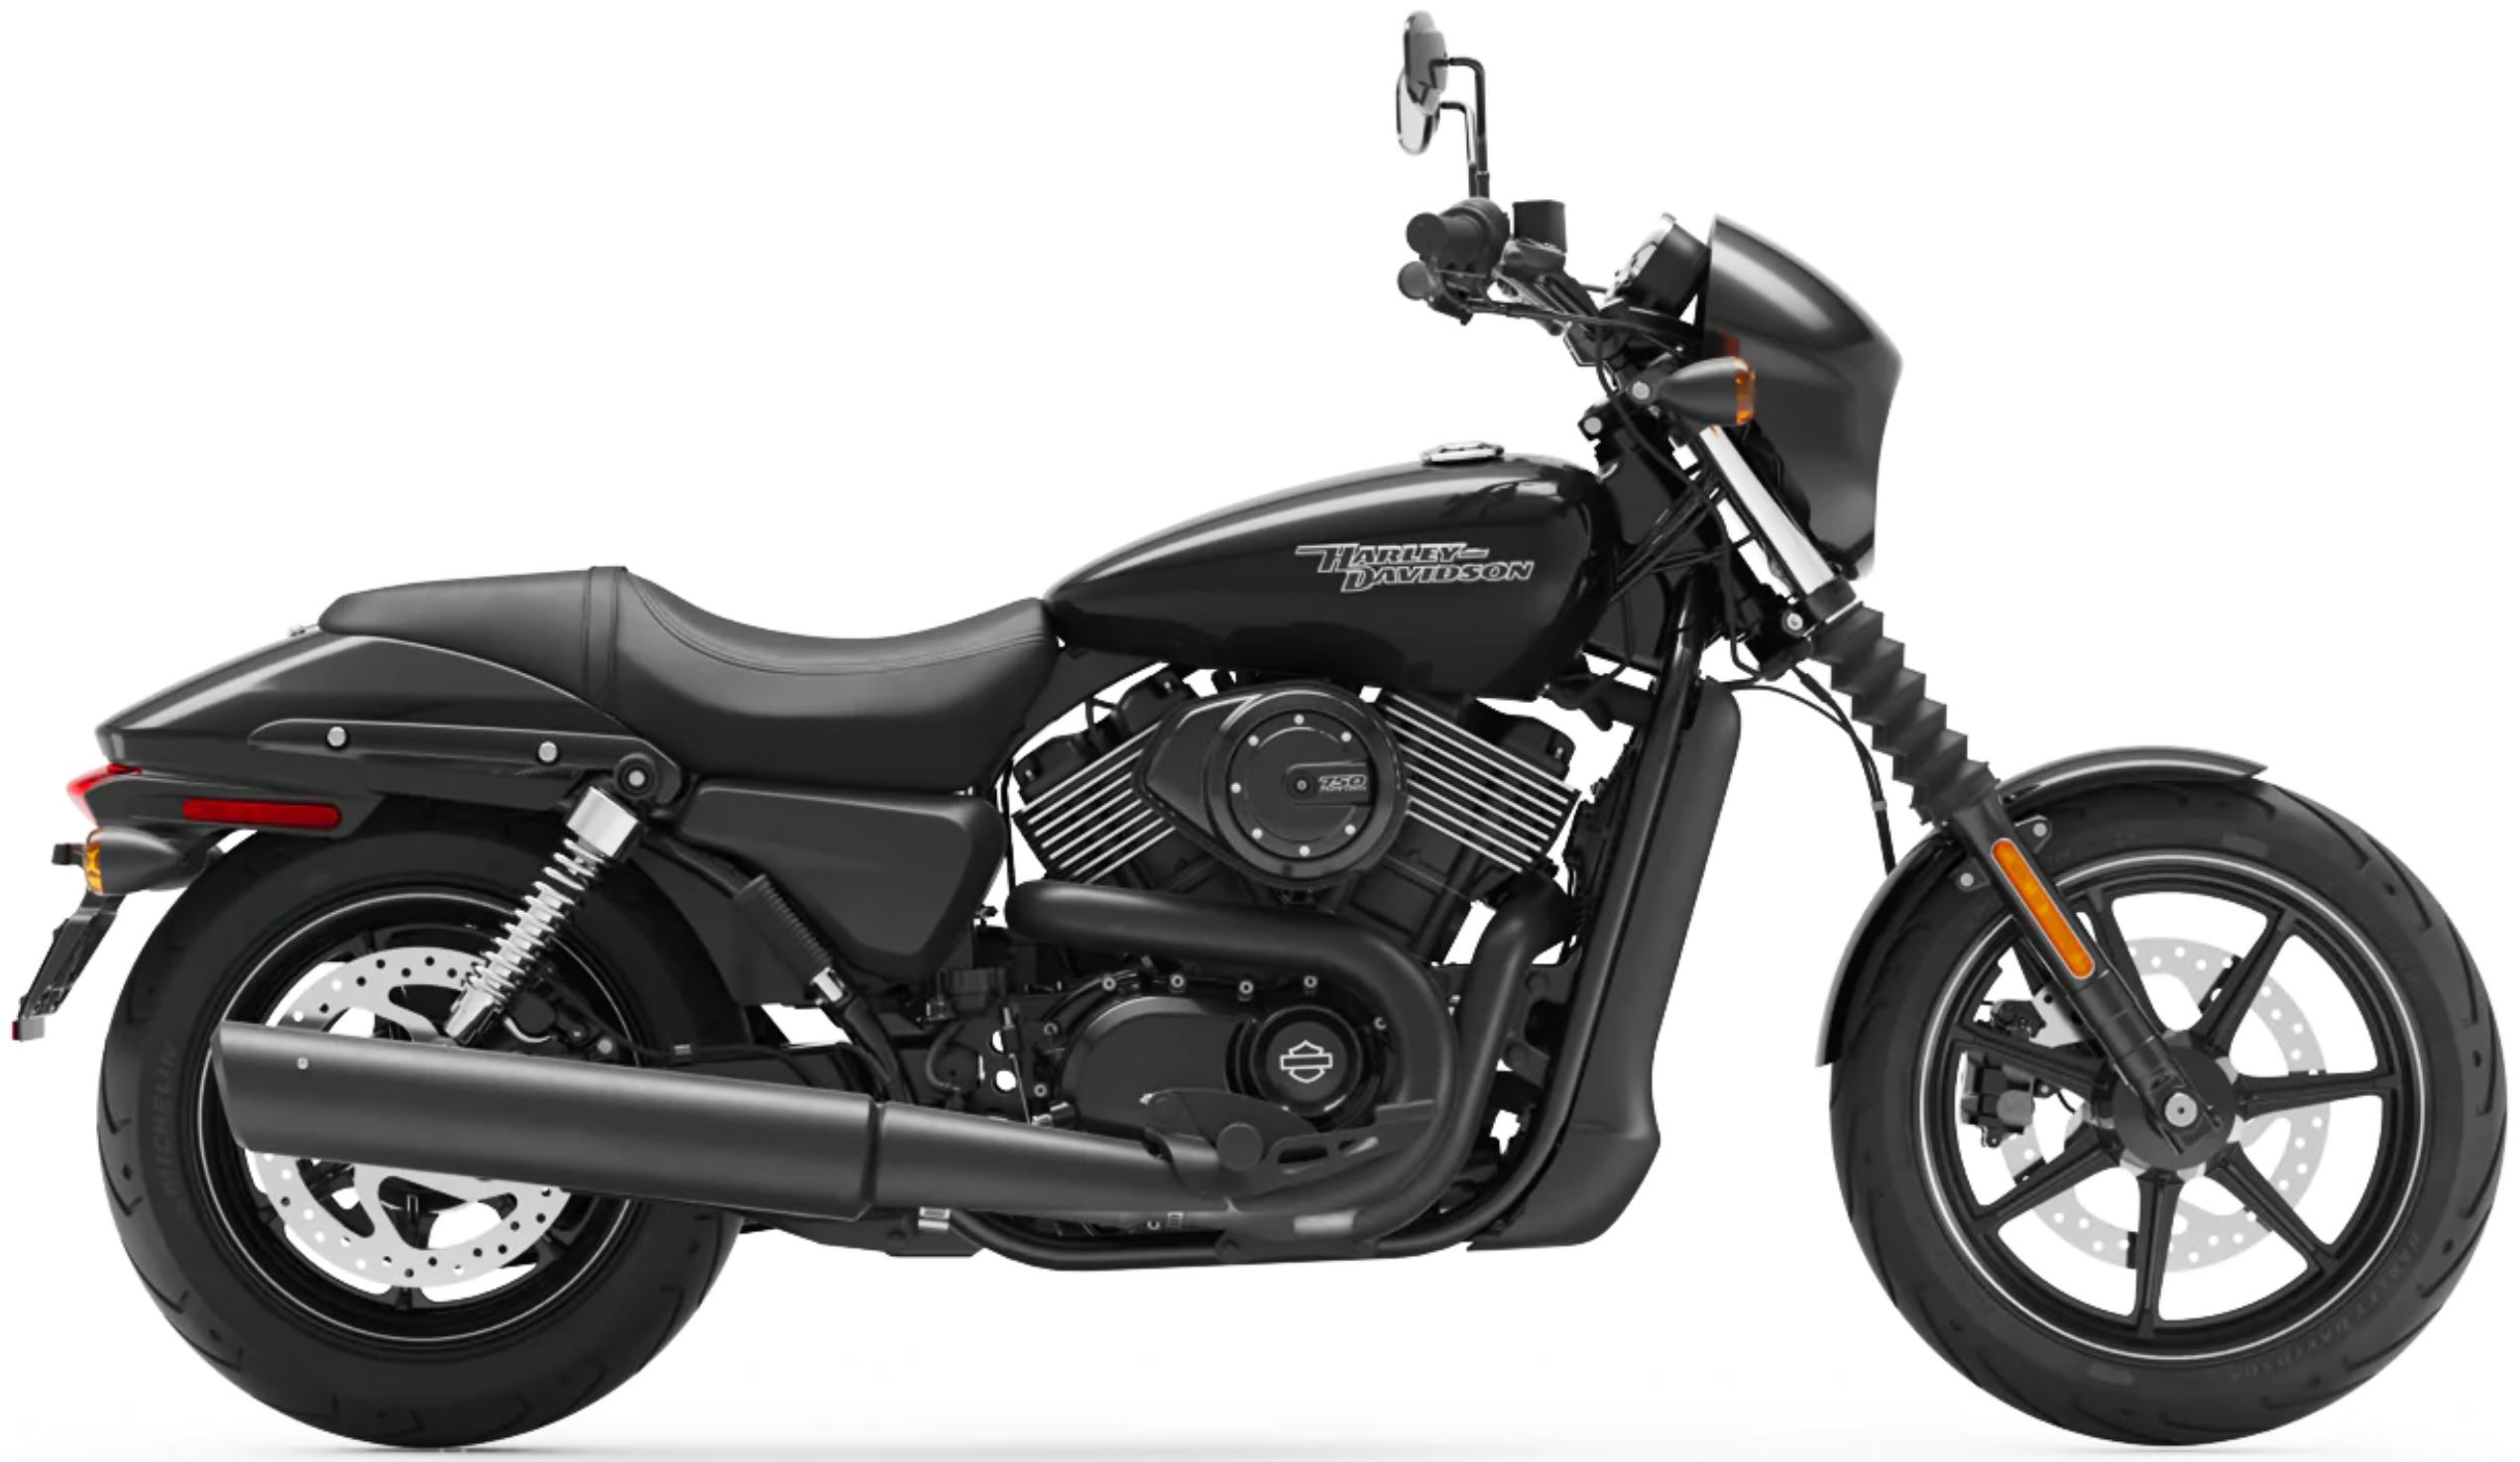 Harley-Davidson Street 750 Price Dropped